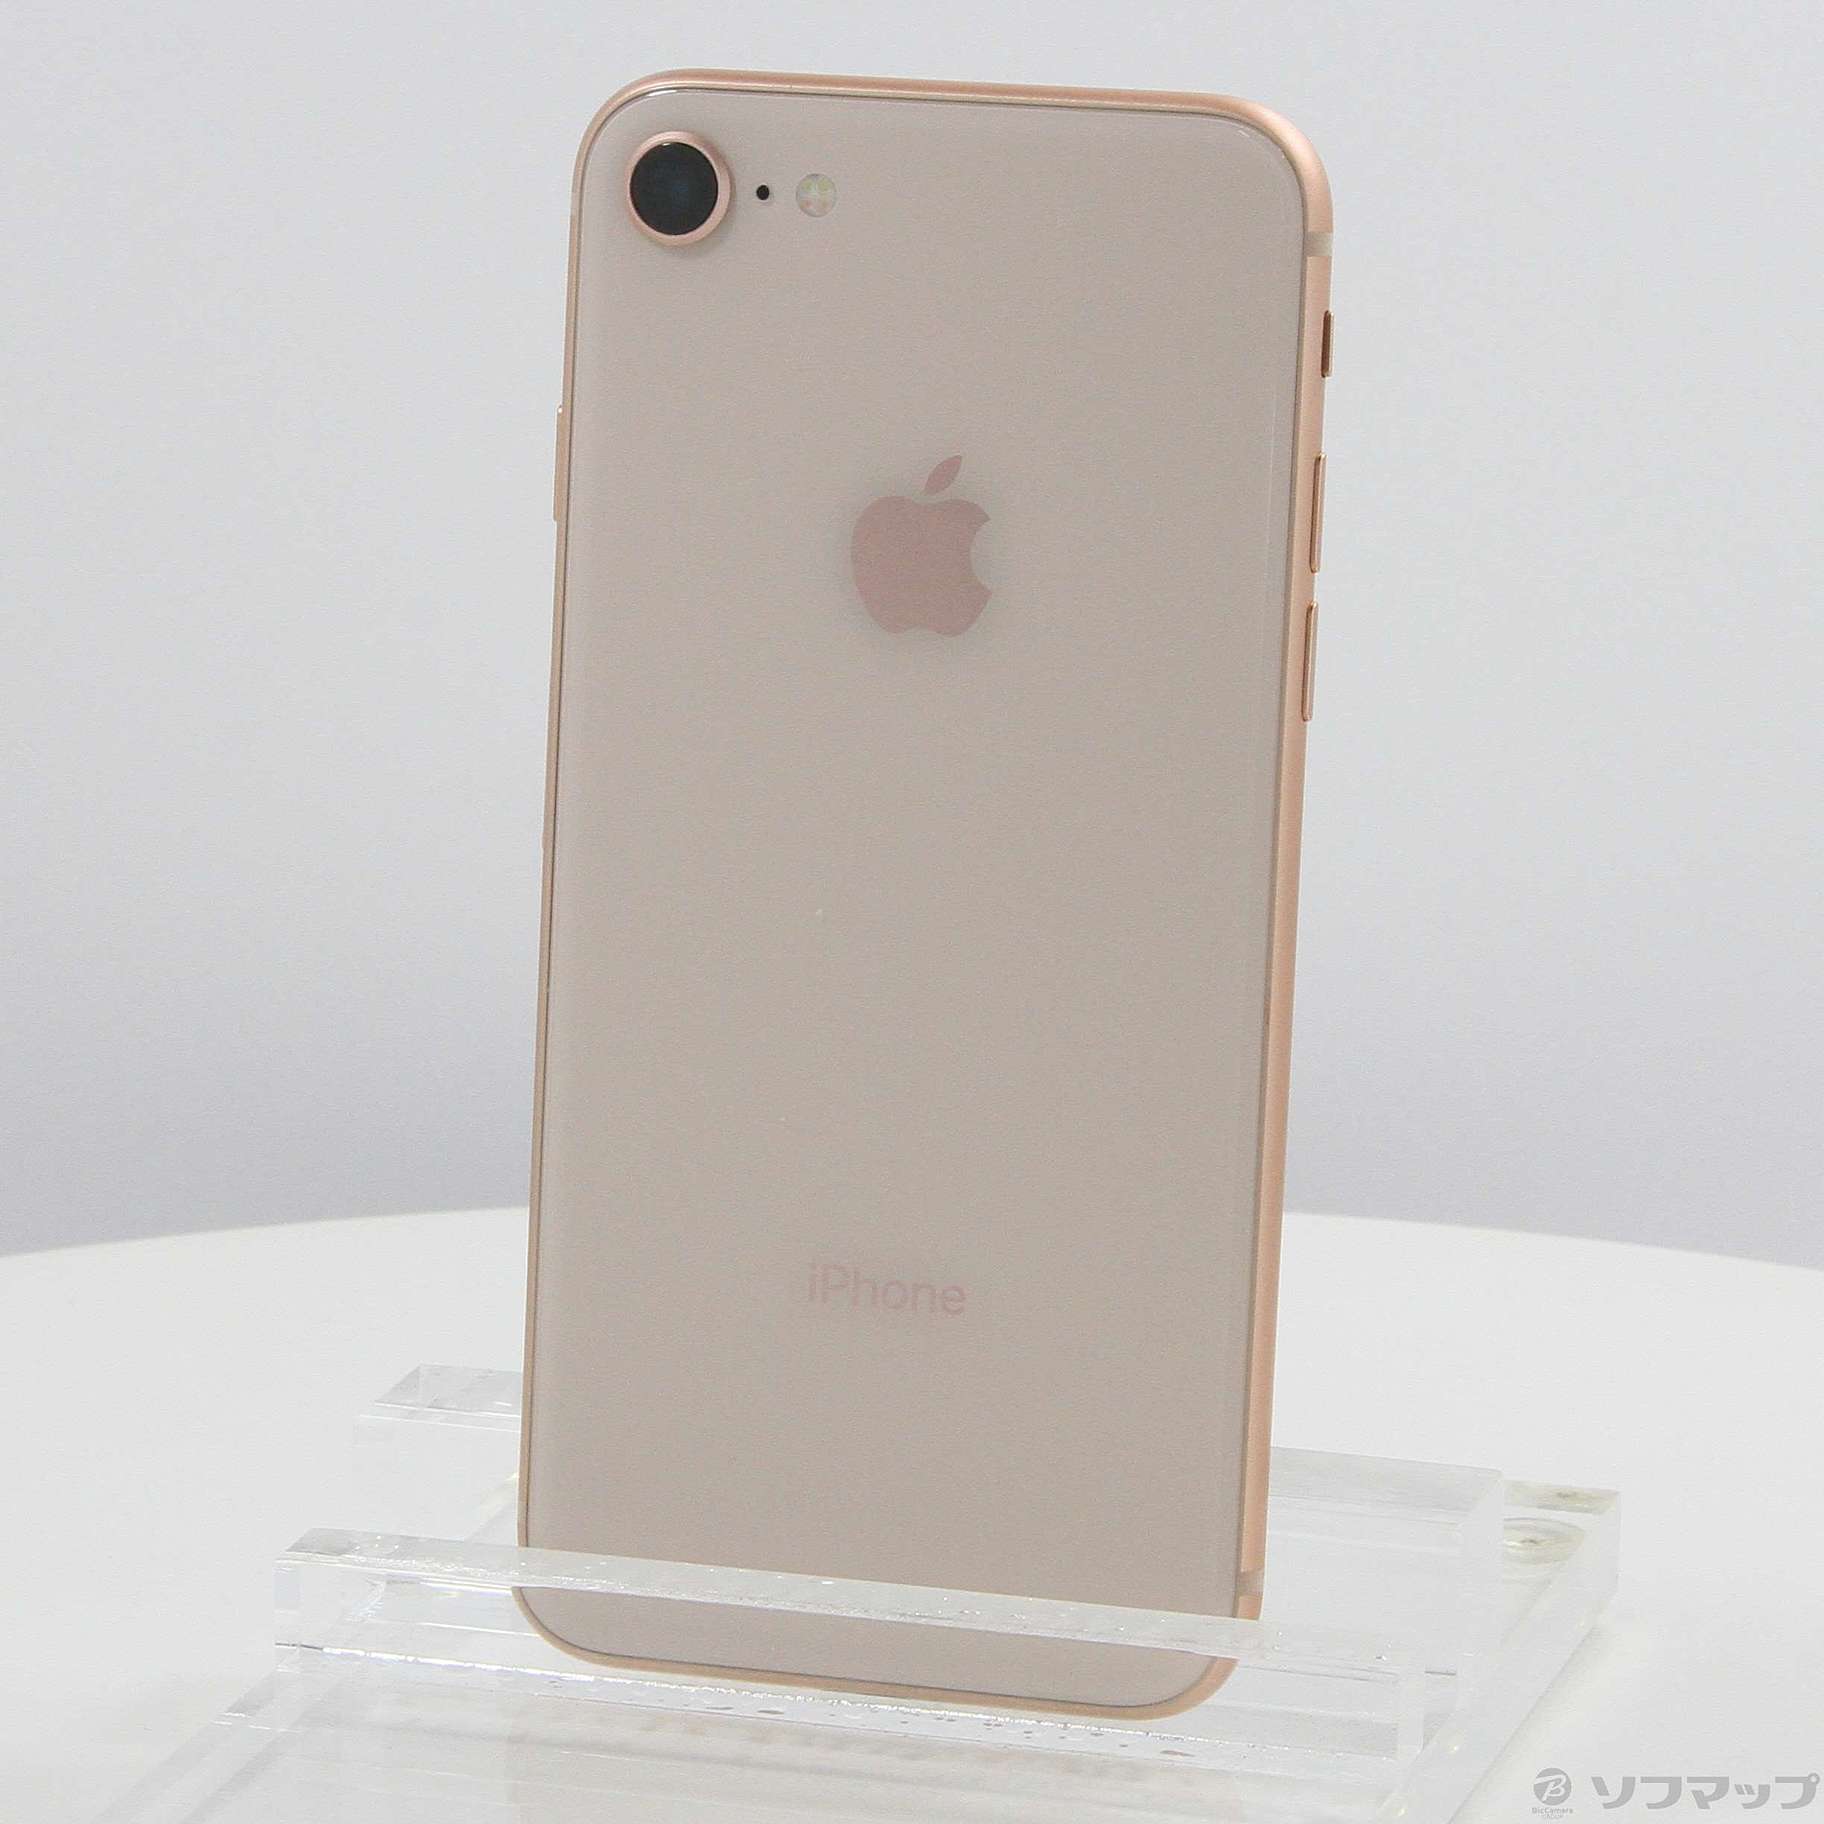 Apple iPhone8 Gold 64 GB SIMフリー